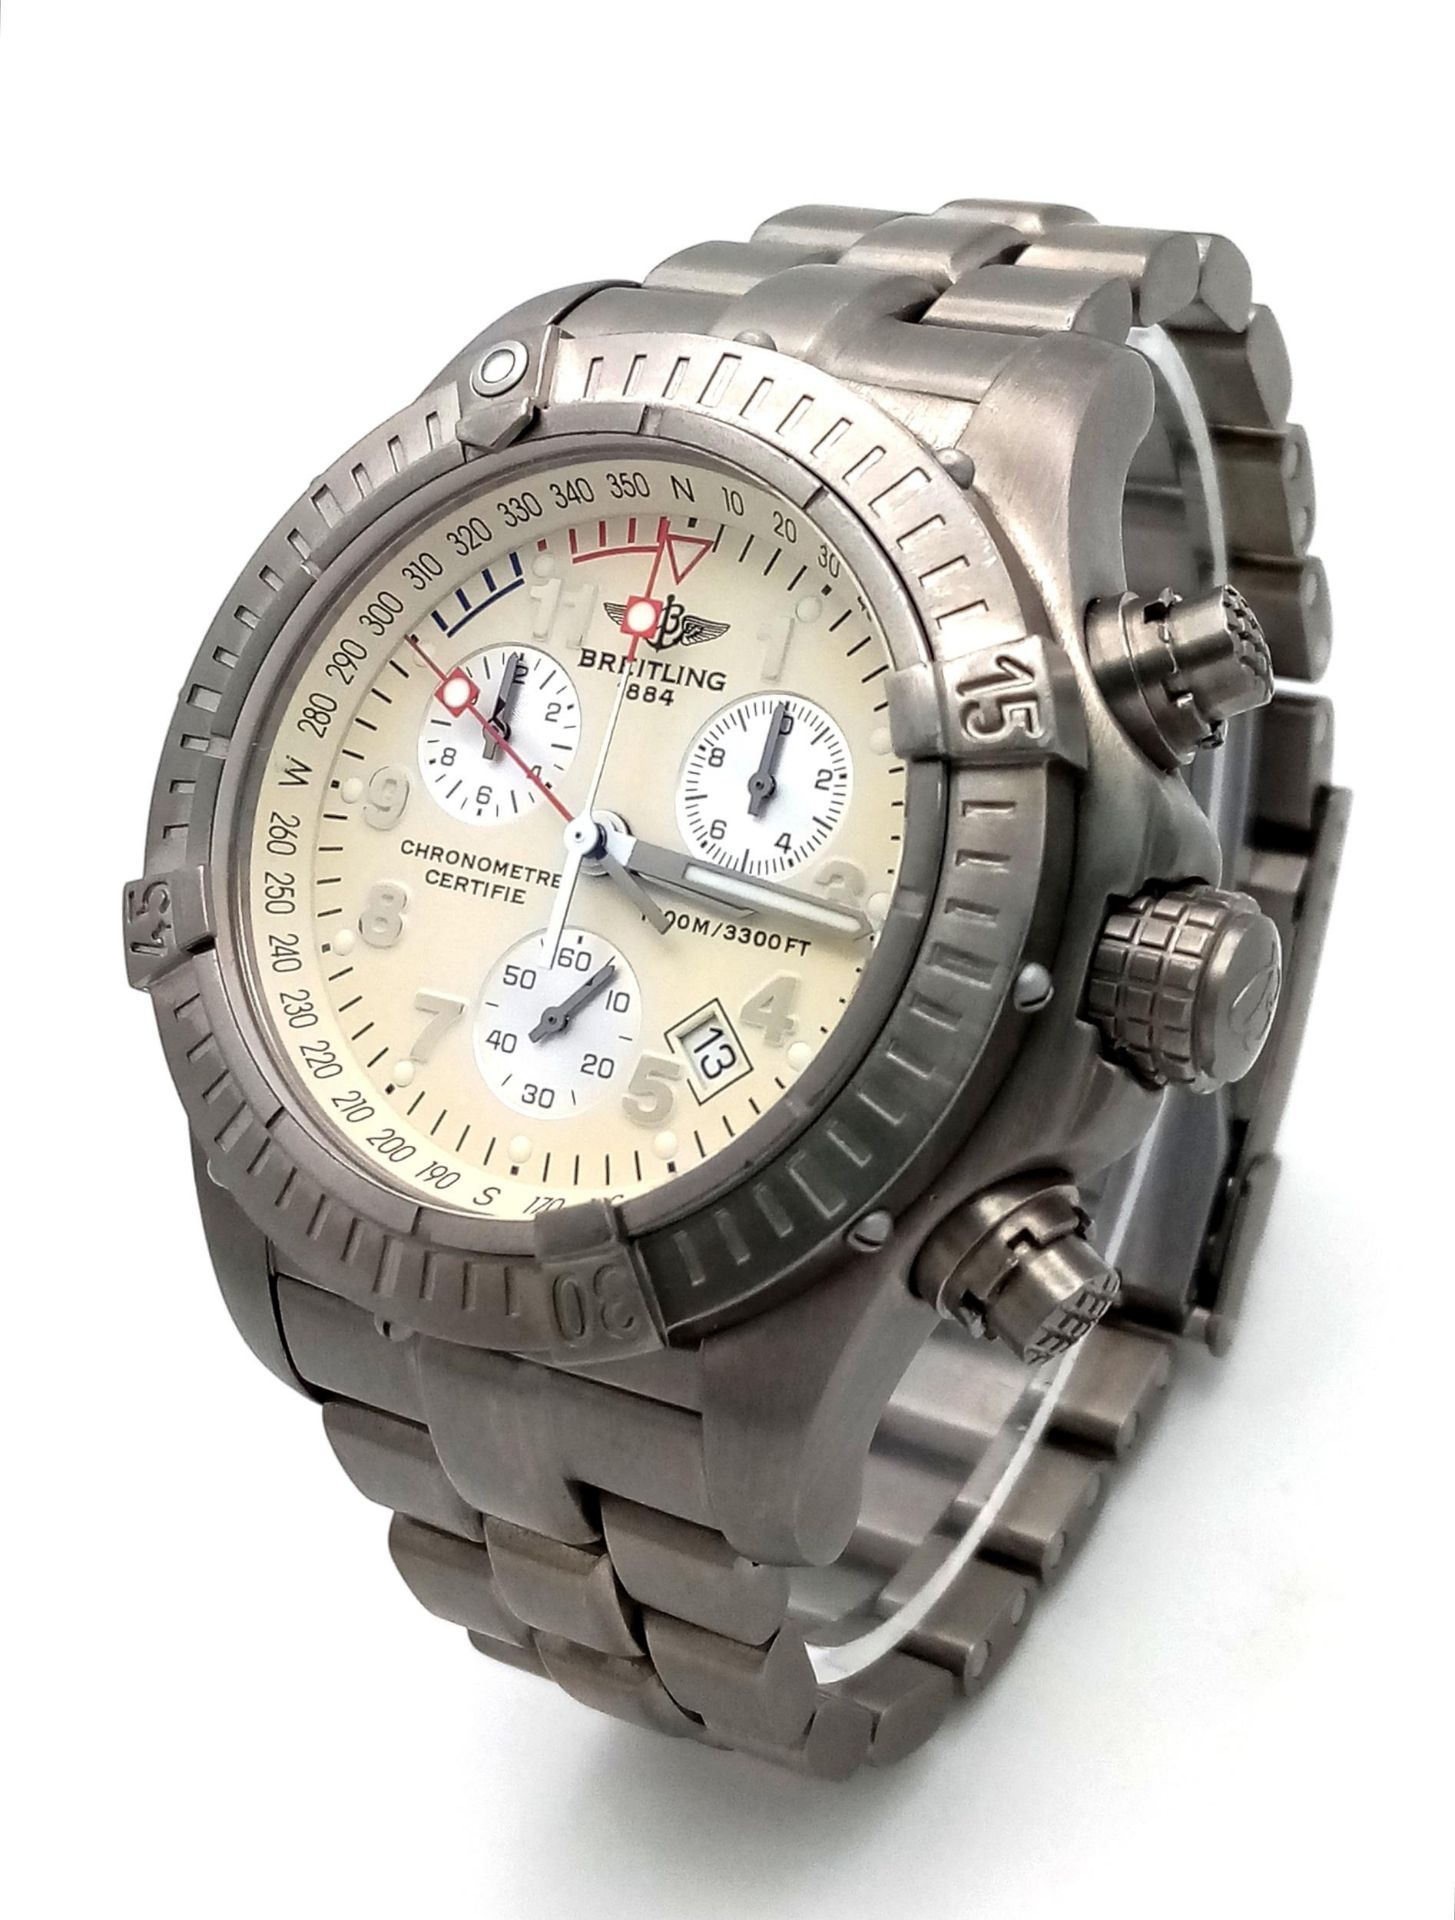 A Breitling Chrono Avenger M1 Quartz Gents Watch. Titanium bracelet and case - 44mm. Cream dial with